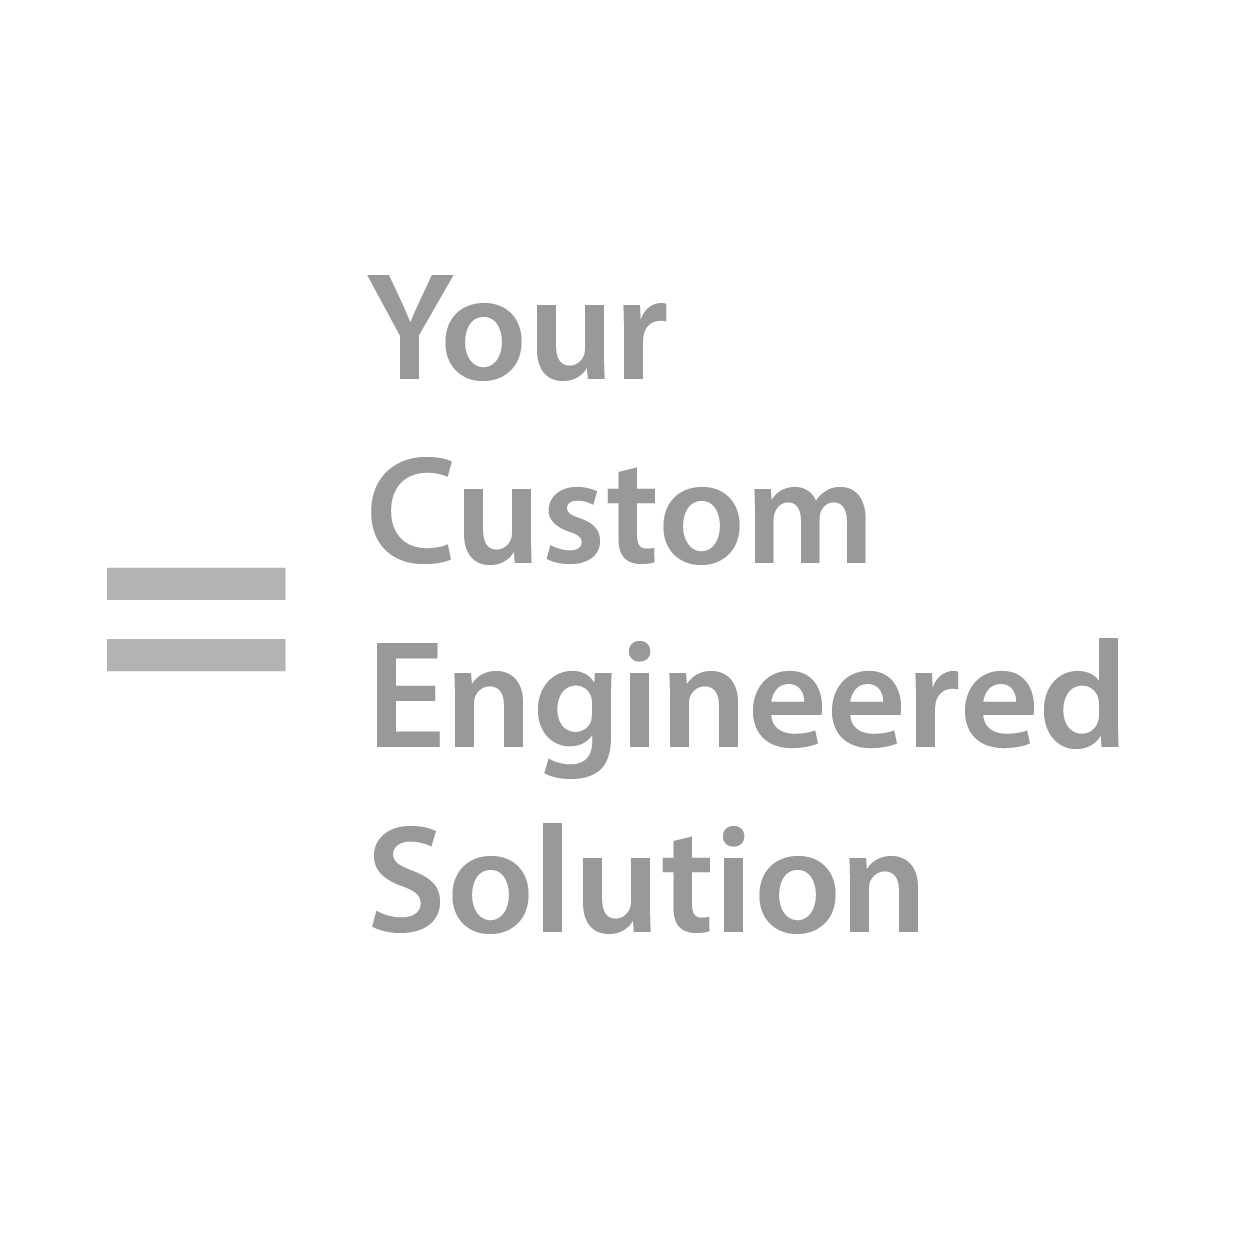 Your custom engineered solution